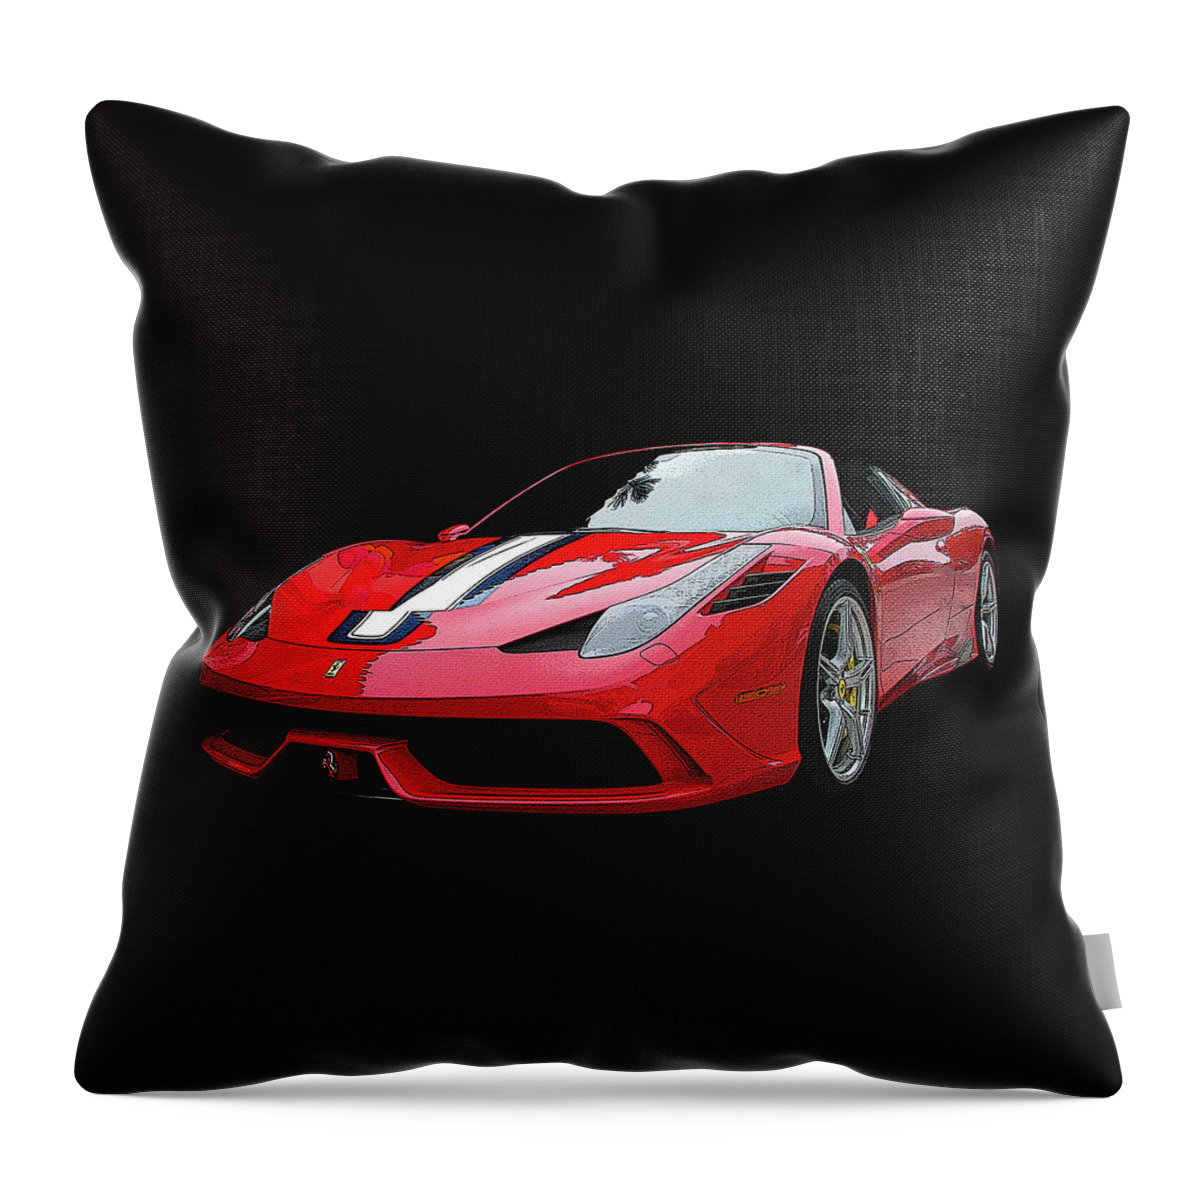 Ferrari Throw Pillow featuring the photograph Ferrari 458 Speciale Aperta by Samuel Sheats